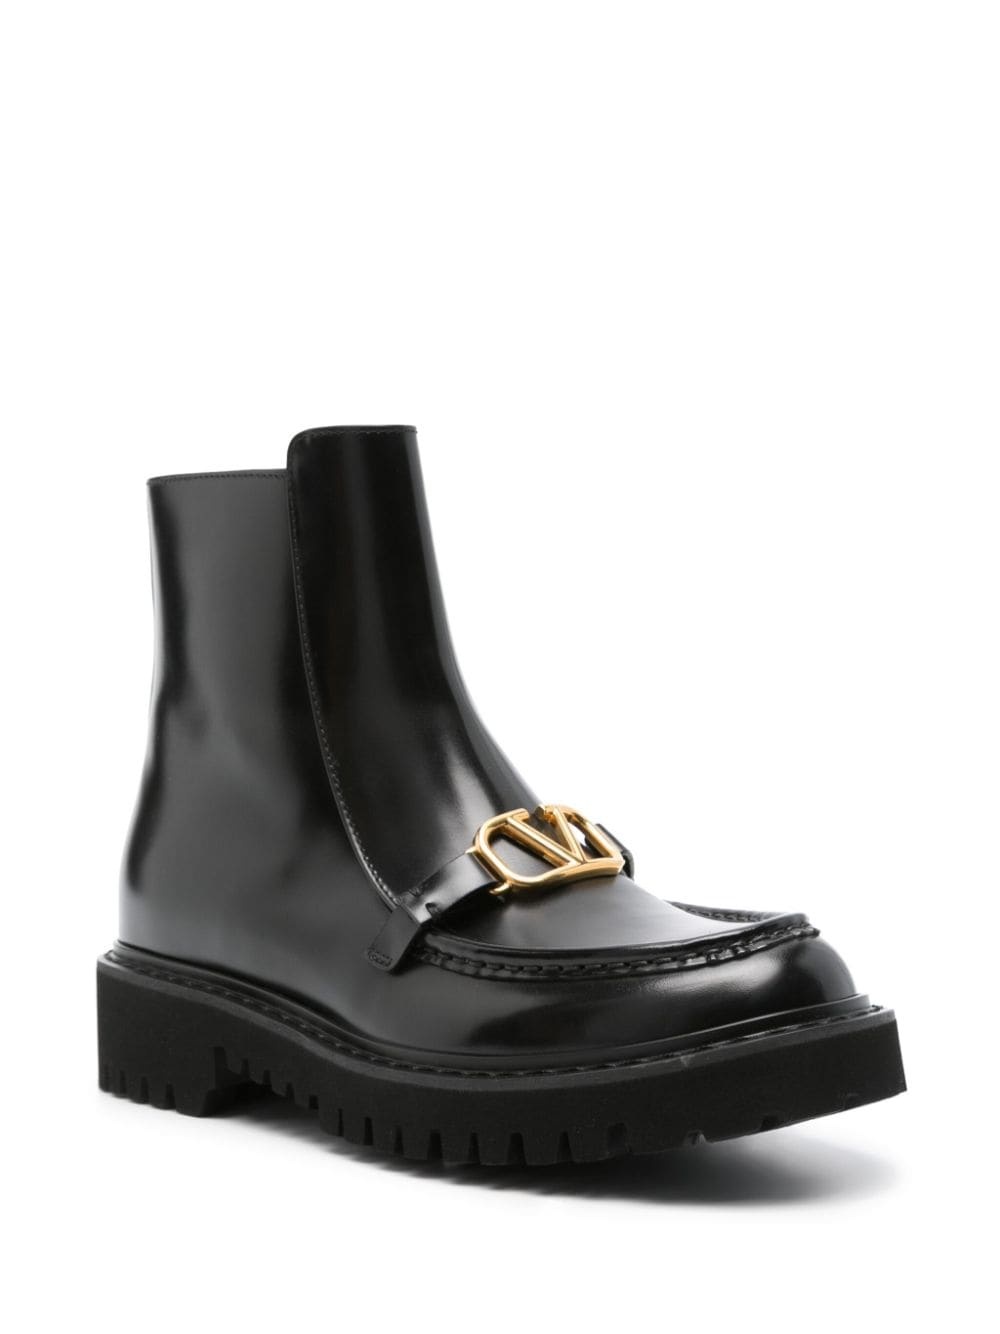 VLogo leather flat boots - 2